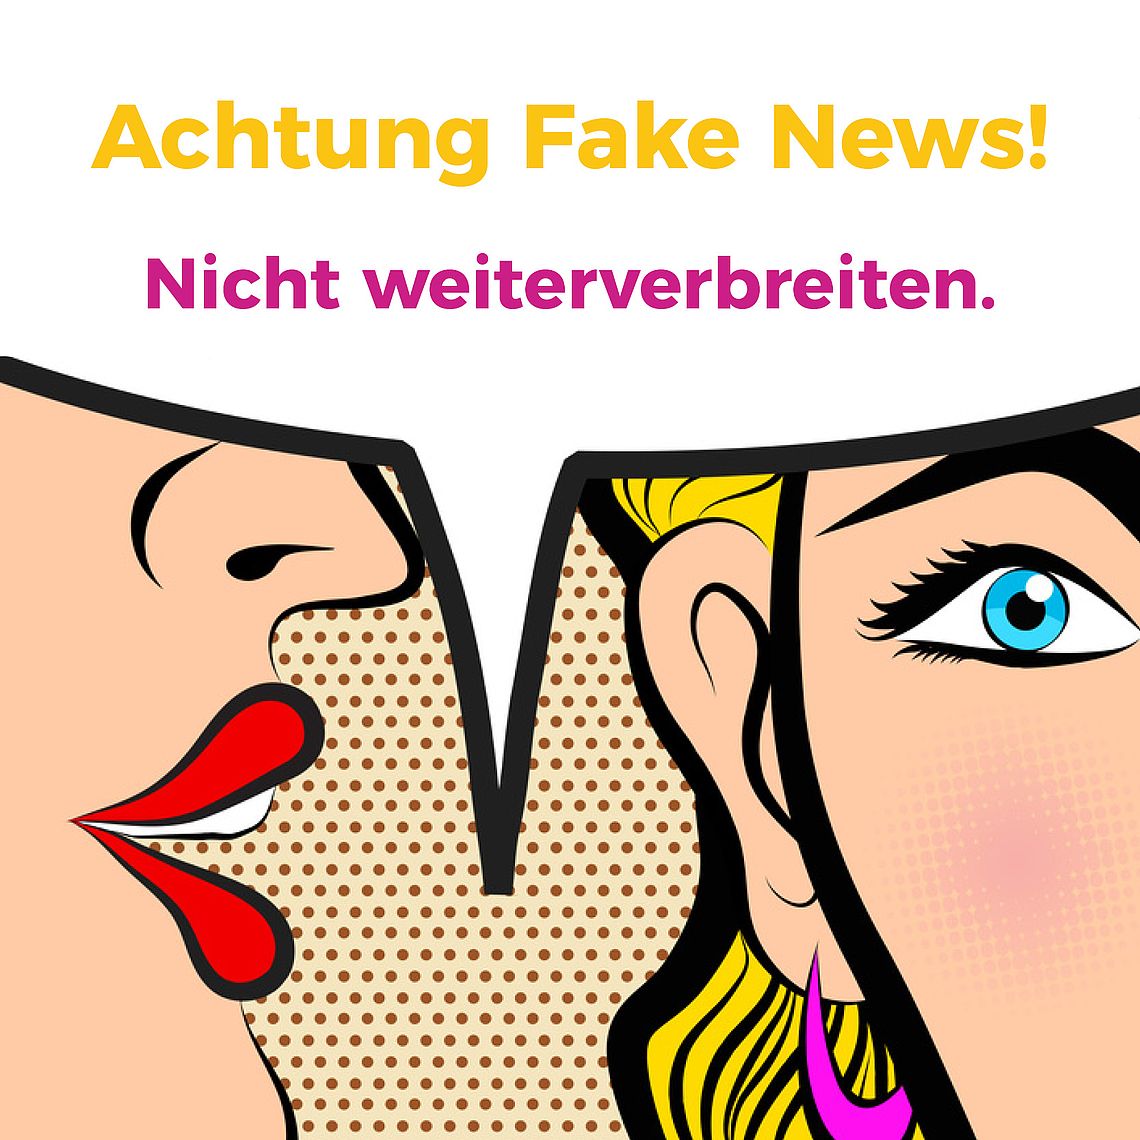 Achtung Fake News!